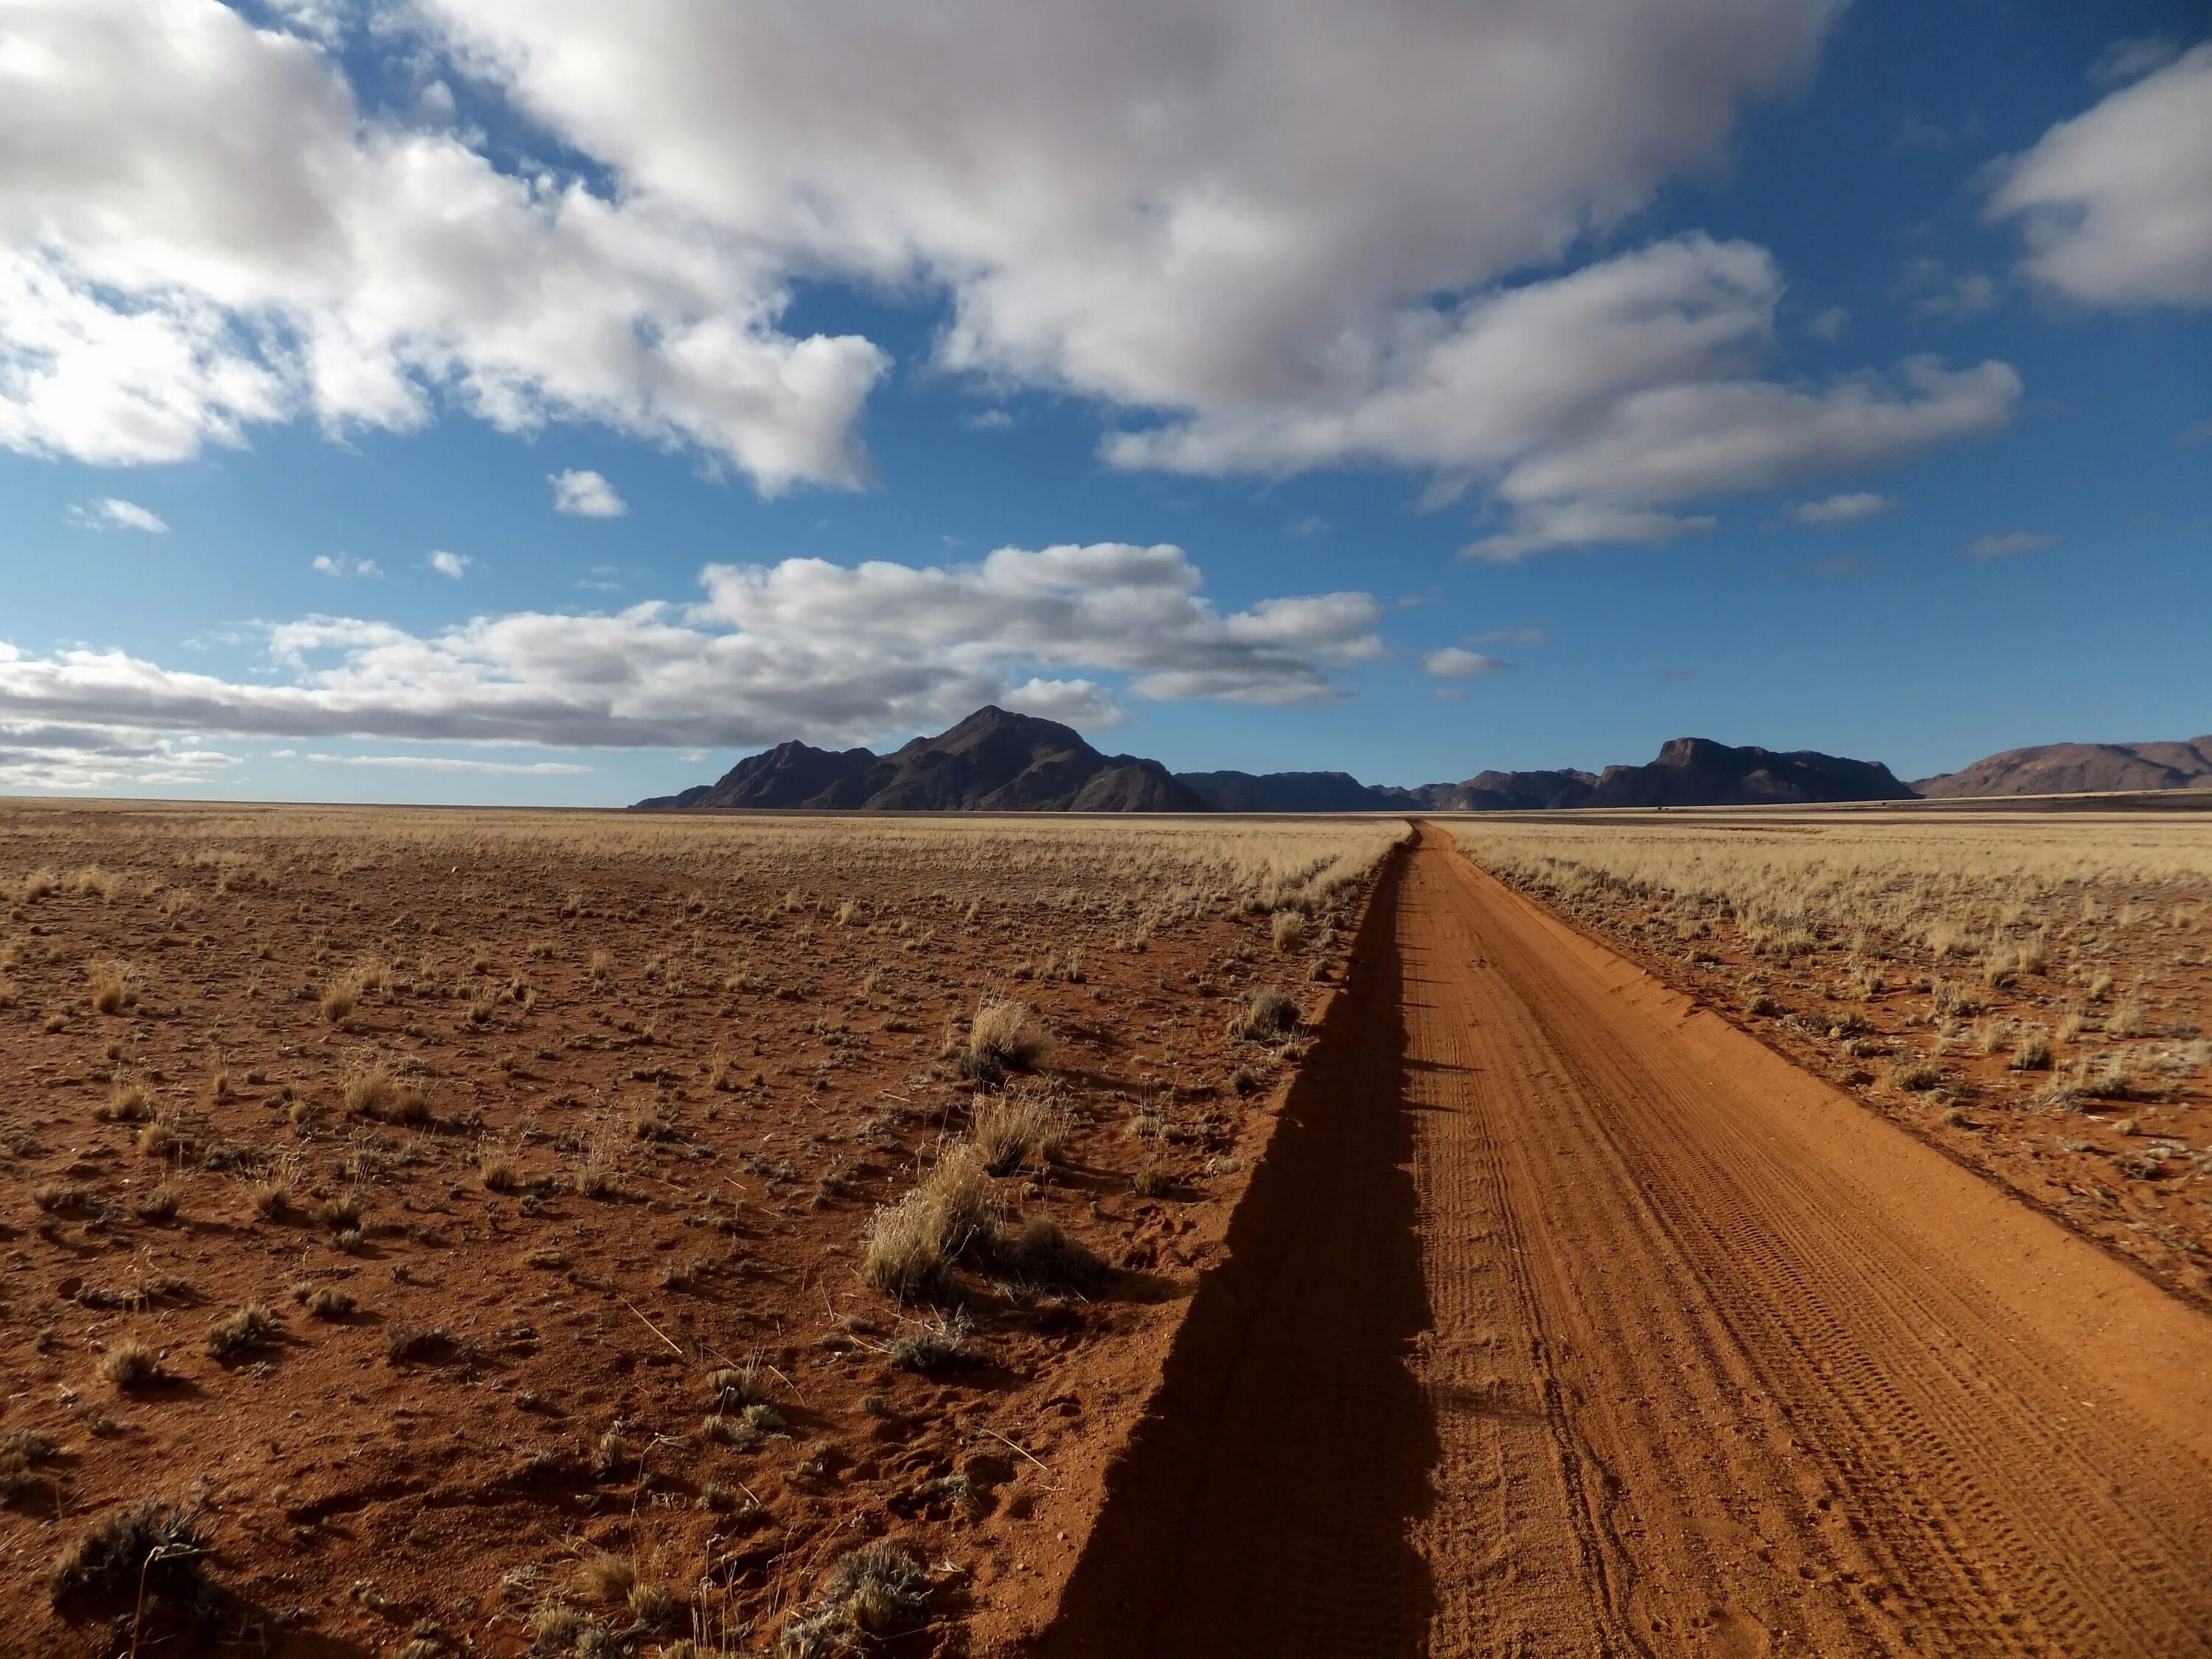 Планета земля пустыня. Клеменс хандуукеме кашуупулва. Почва пустыни Намиб. Пустынная земля. Дорога в пустыне.